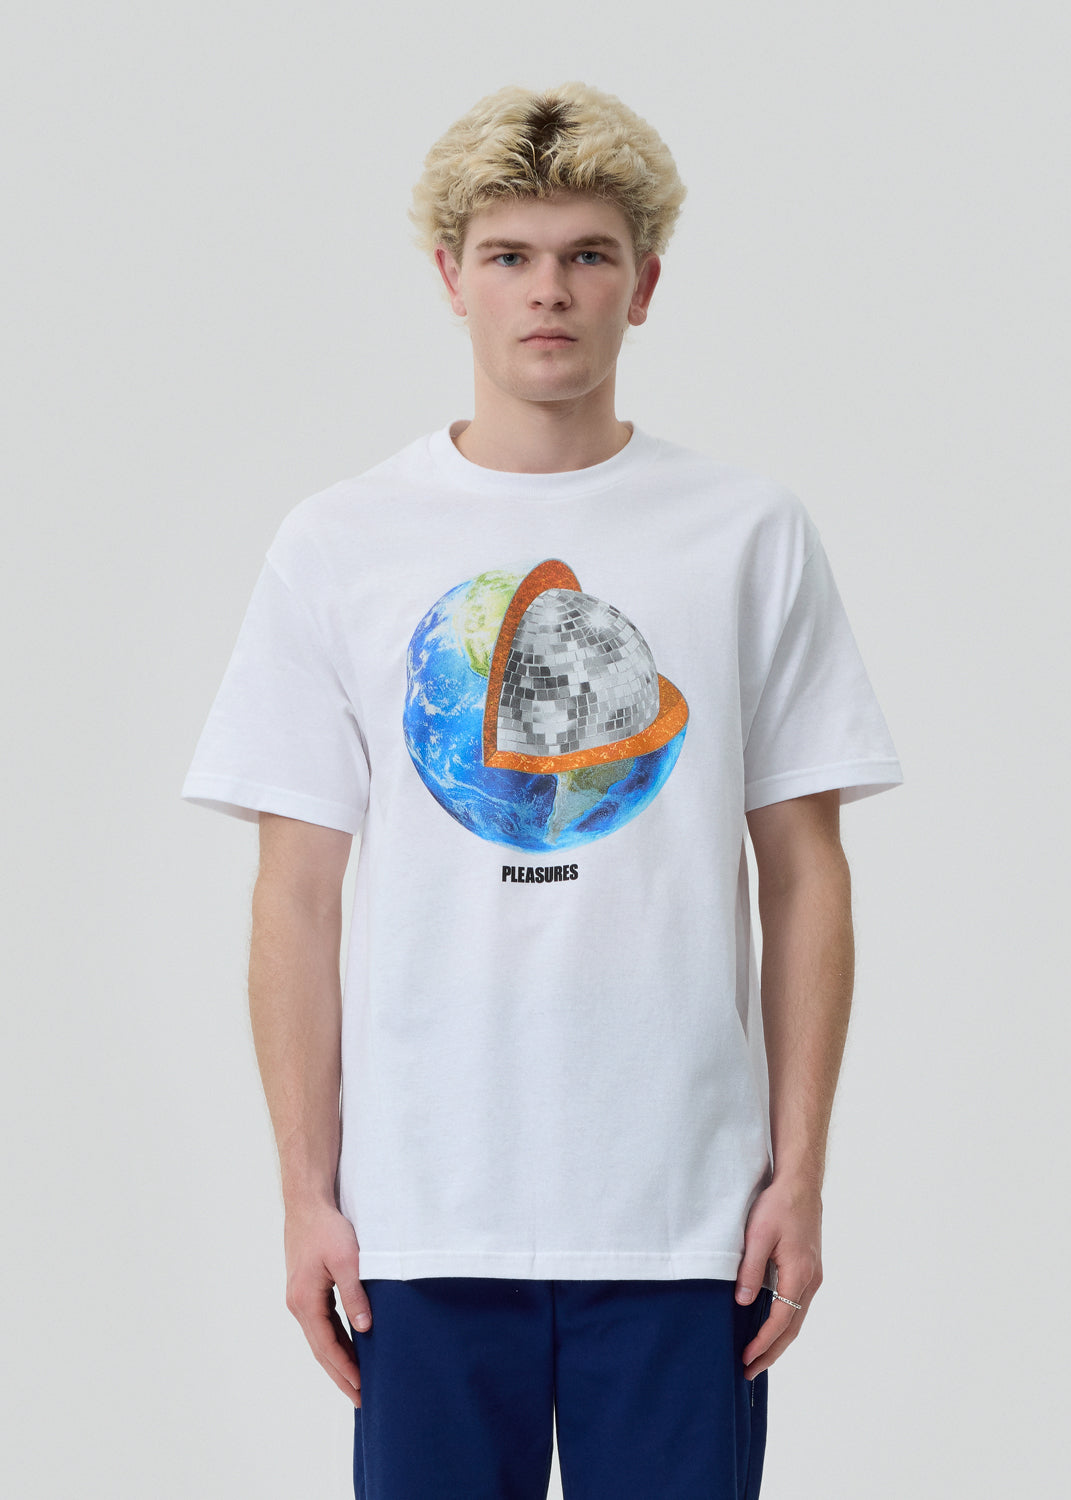 Pleasures - White Dance T-Shirt | 1032 SPACE